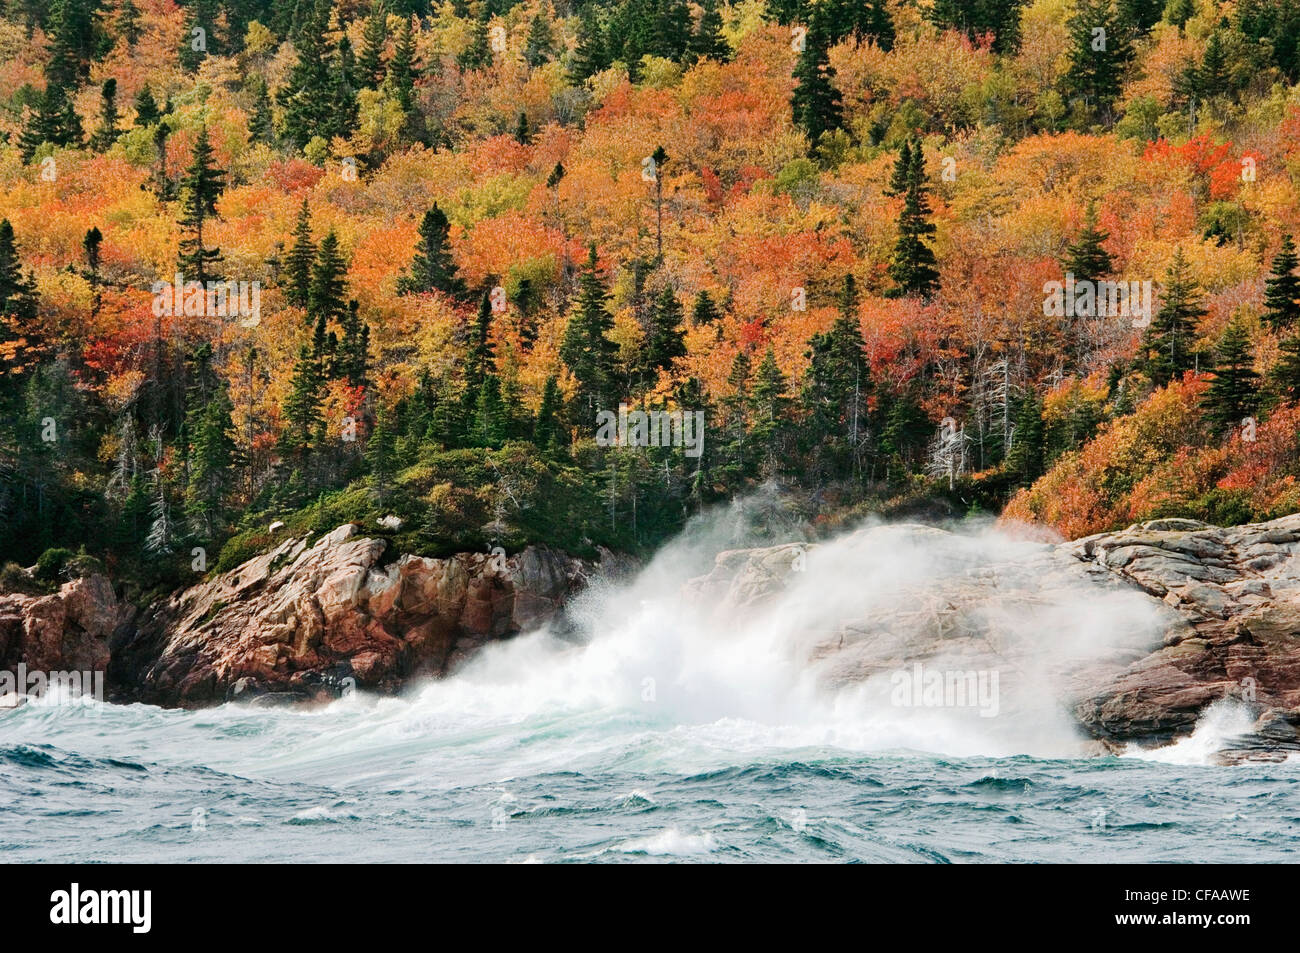 Atlantic Ocean storm waves and fall foliage along Neils Harbour, Cape Breton Highlands National Park, Nova Scotia, Canada. Stock Photo